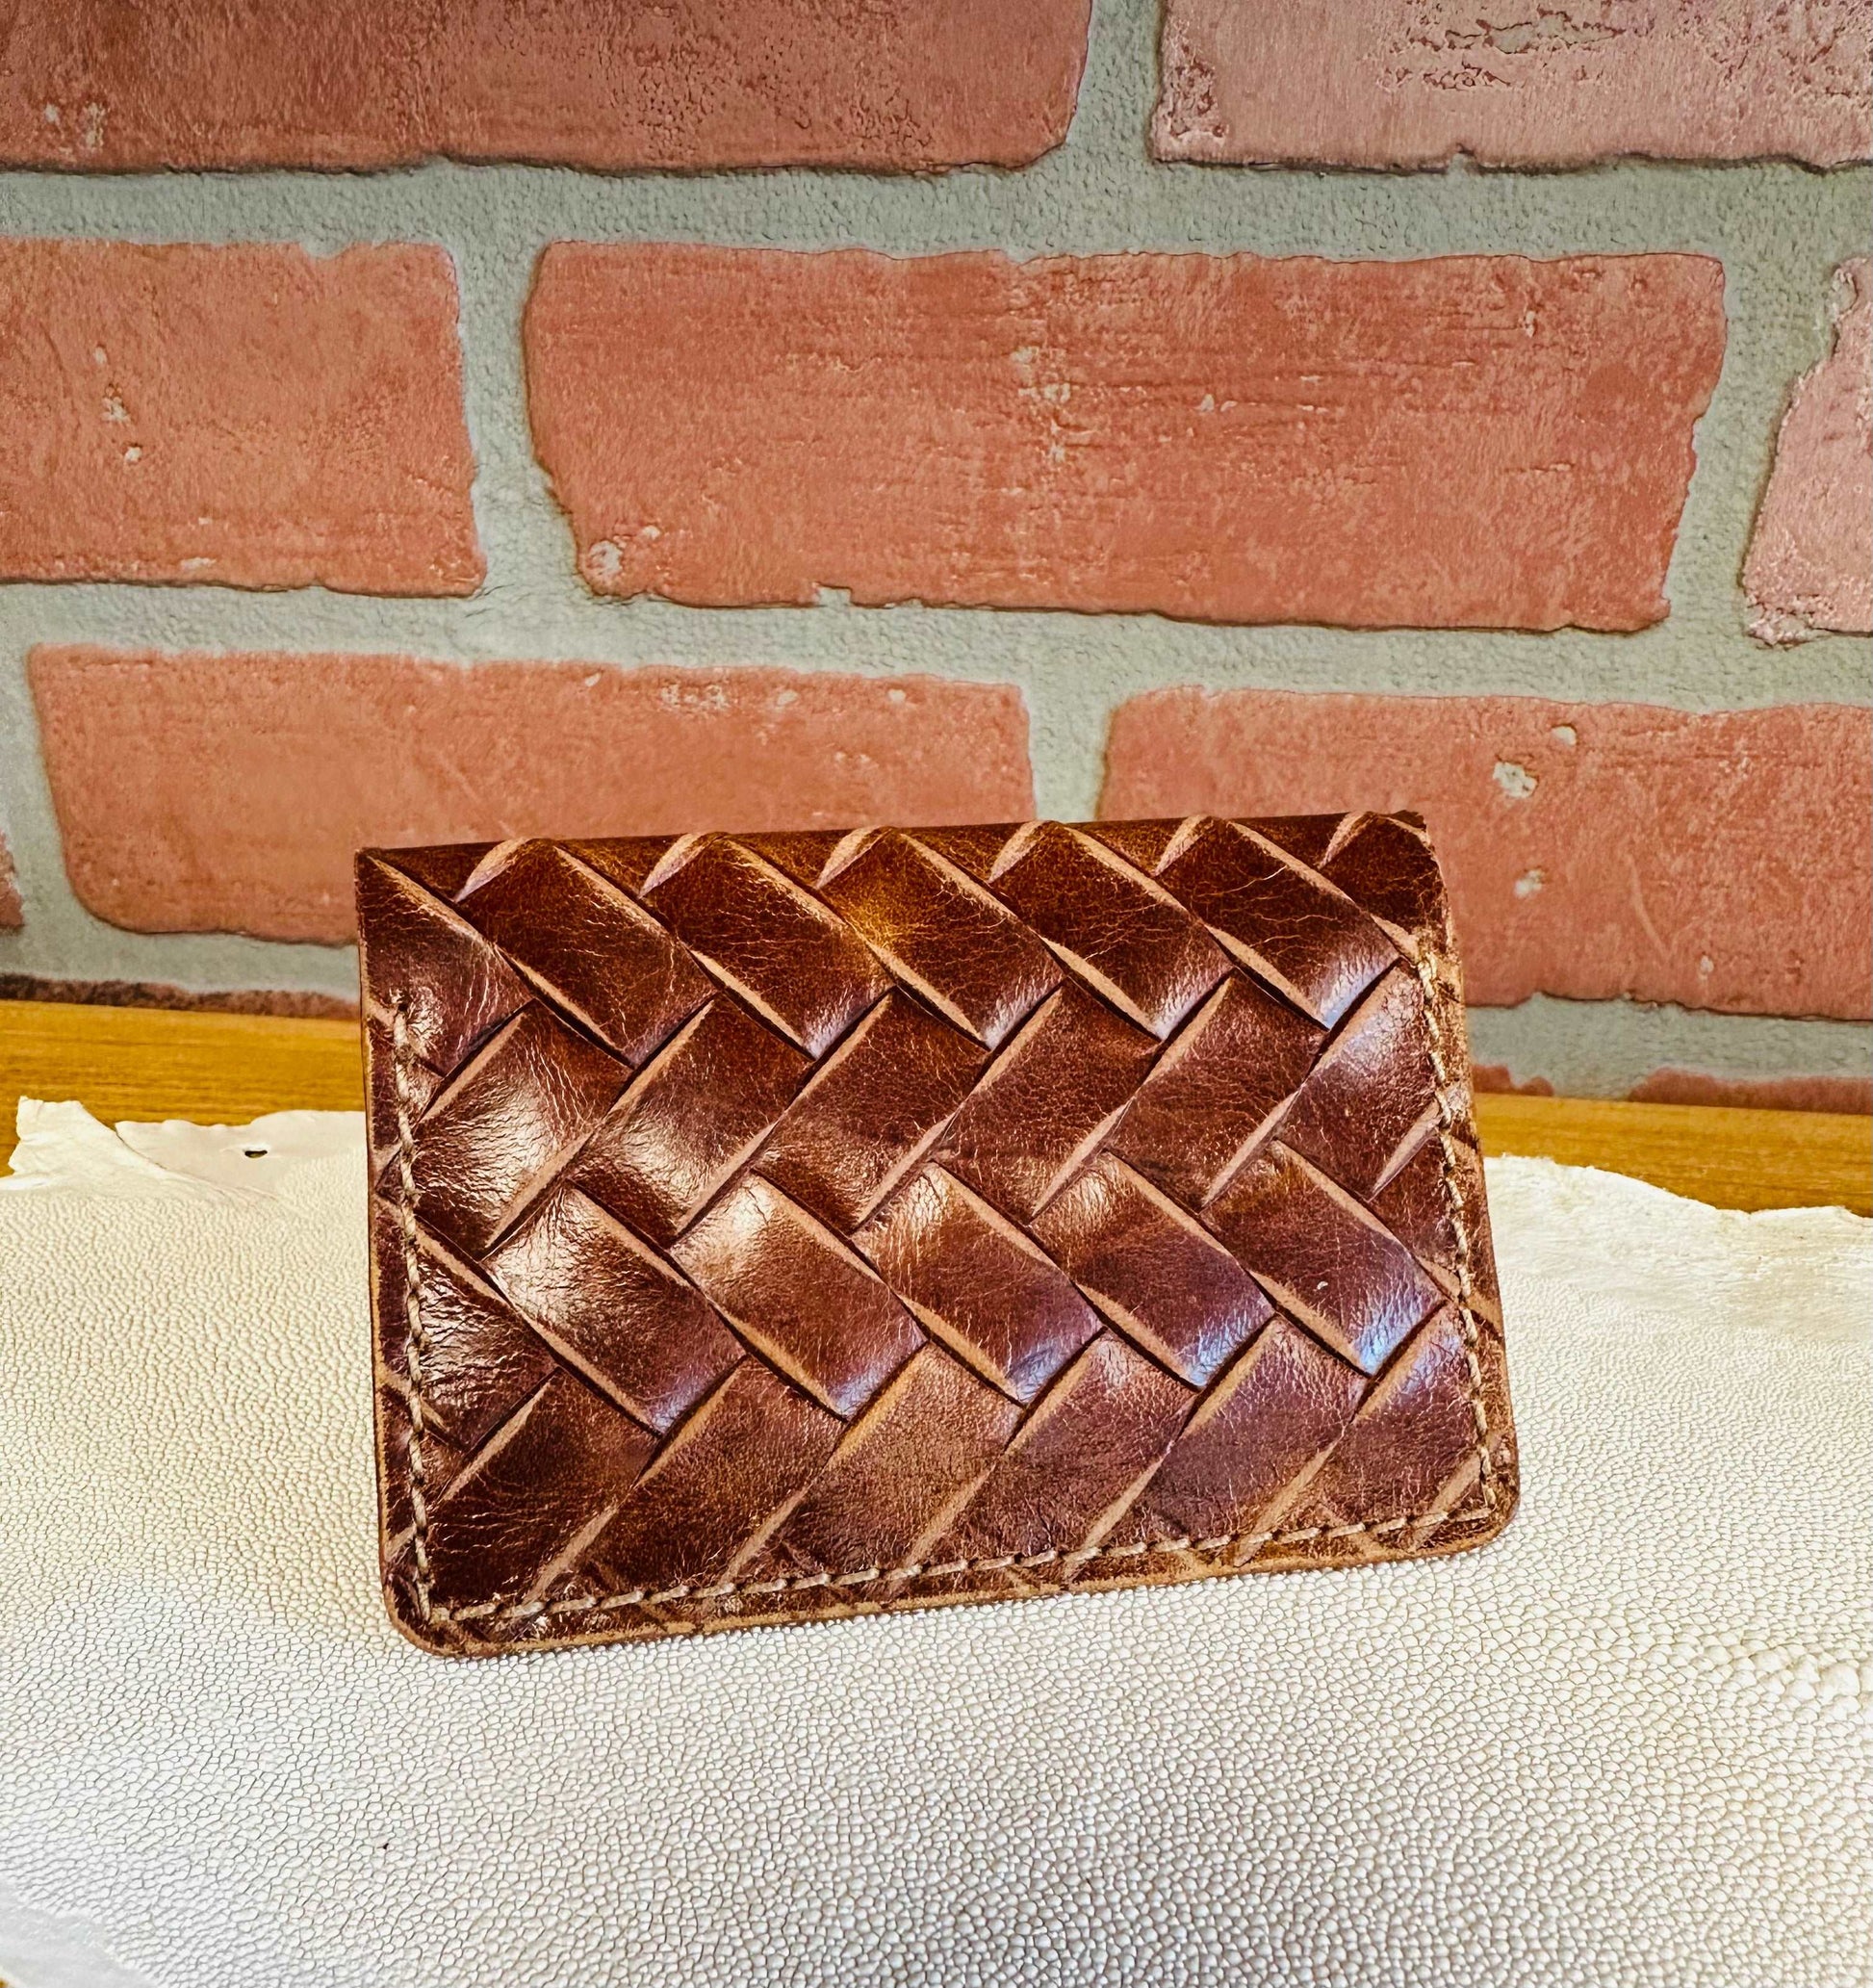 Big Minimalist Wallet - KateLynn Leatherworks